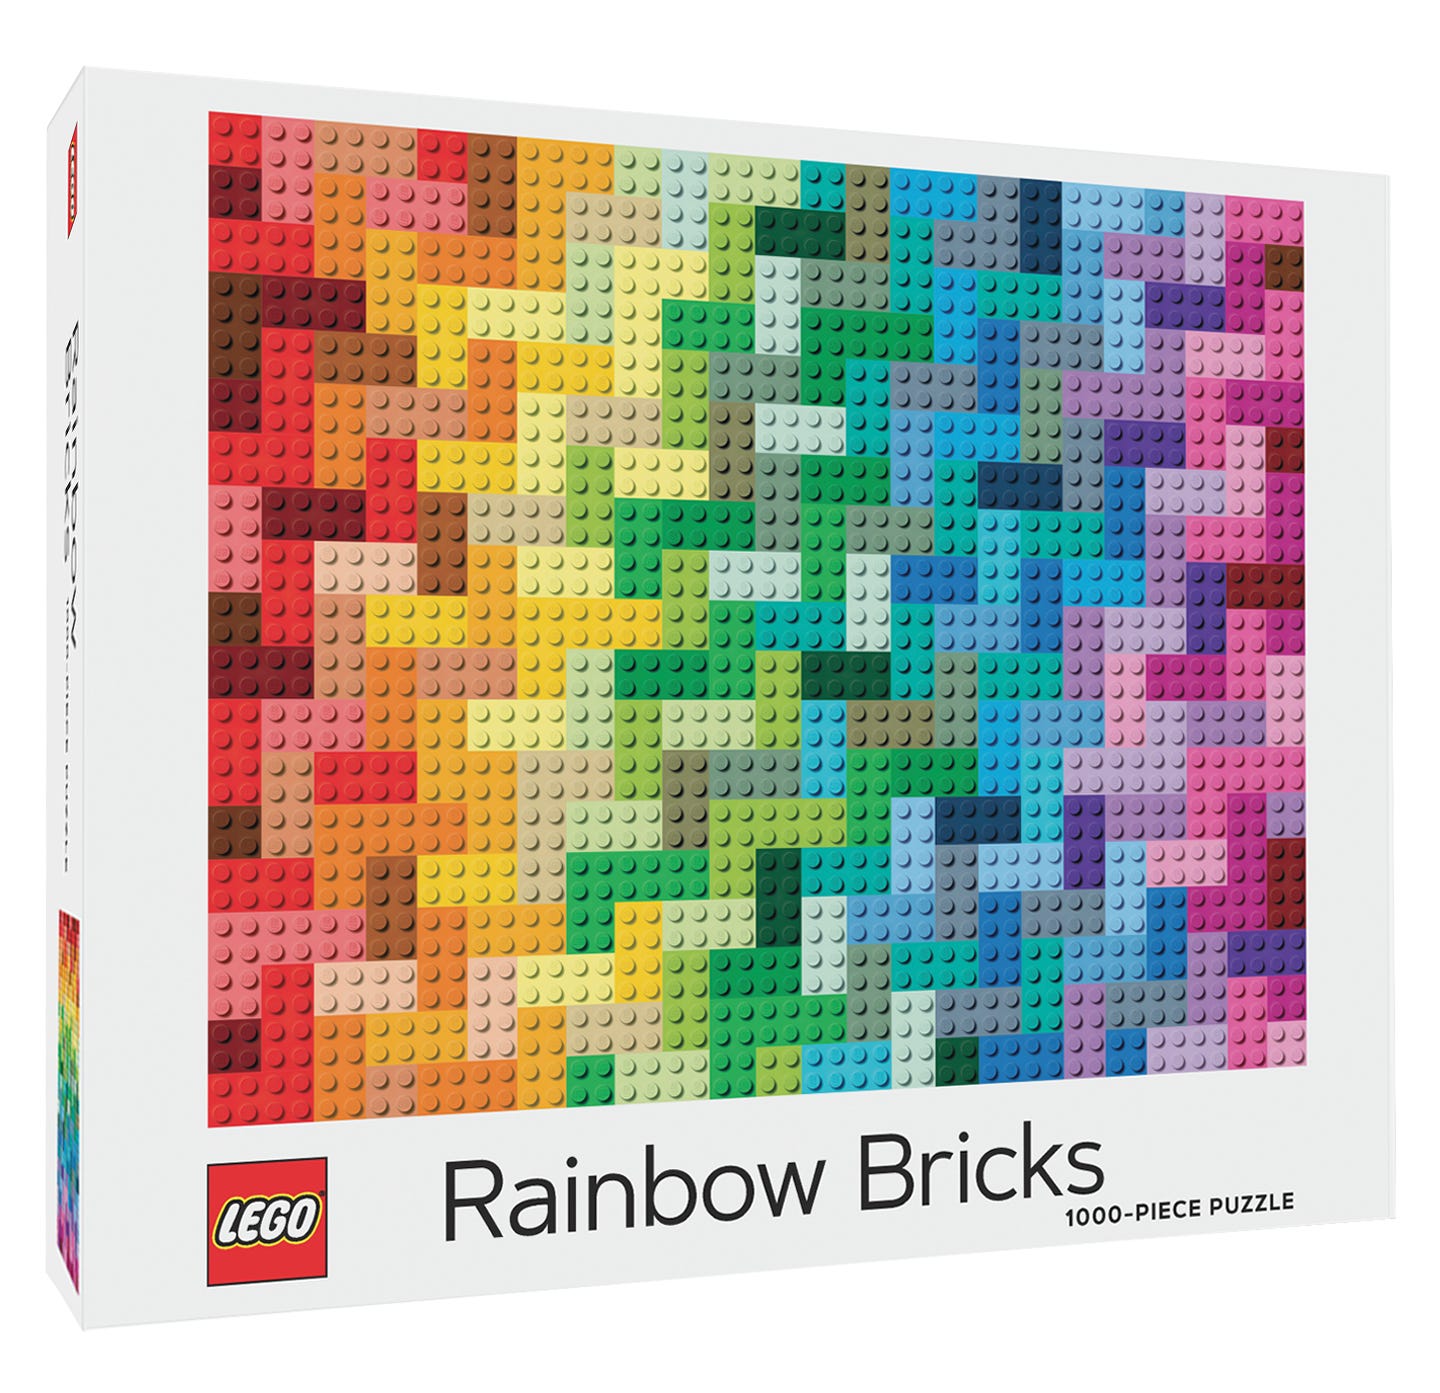 LEGO Puzle “Rainbow Bricks” (1000 piezas)